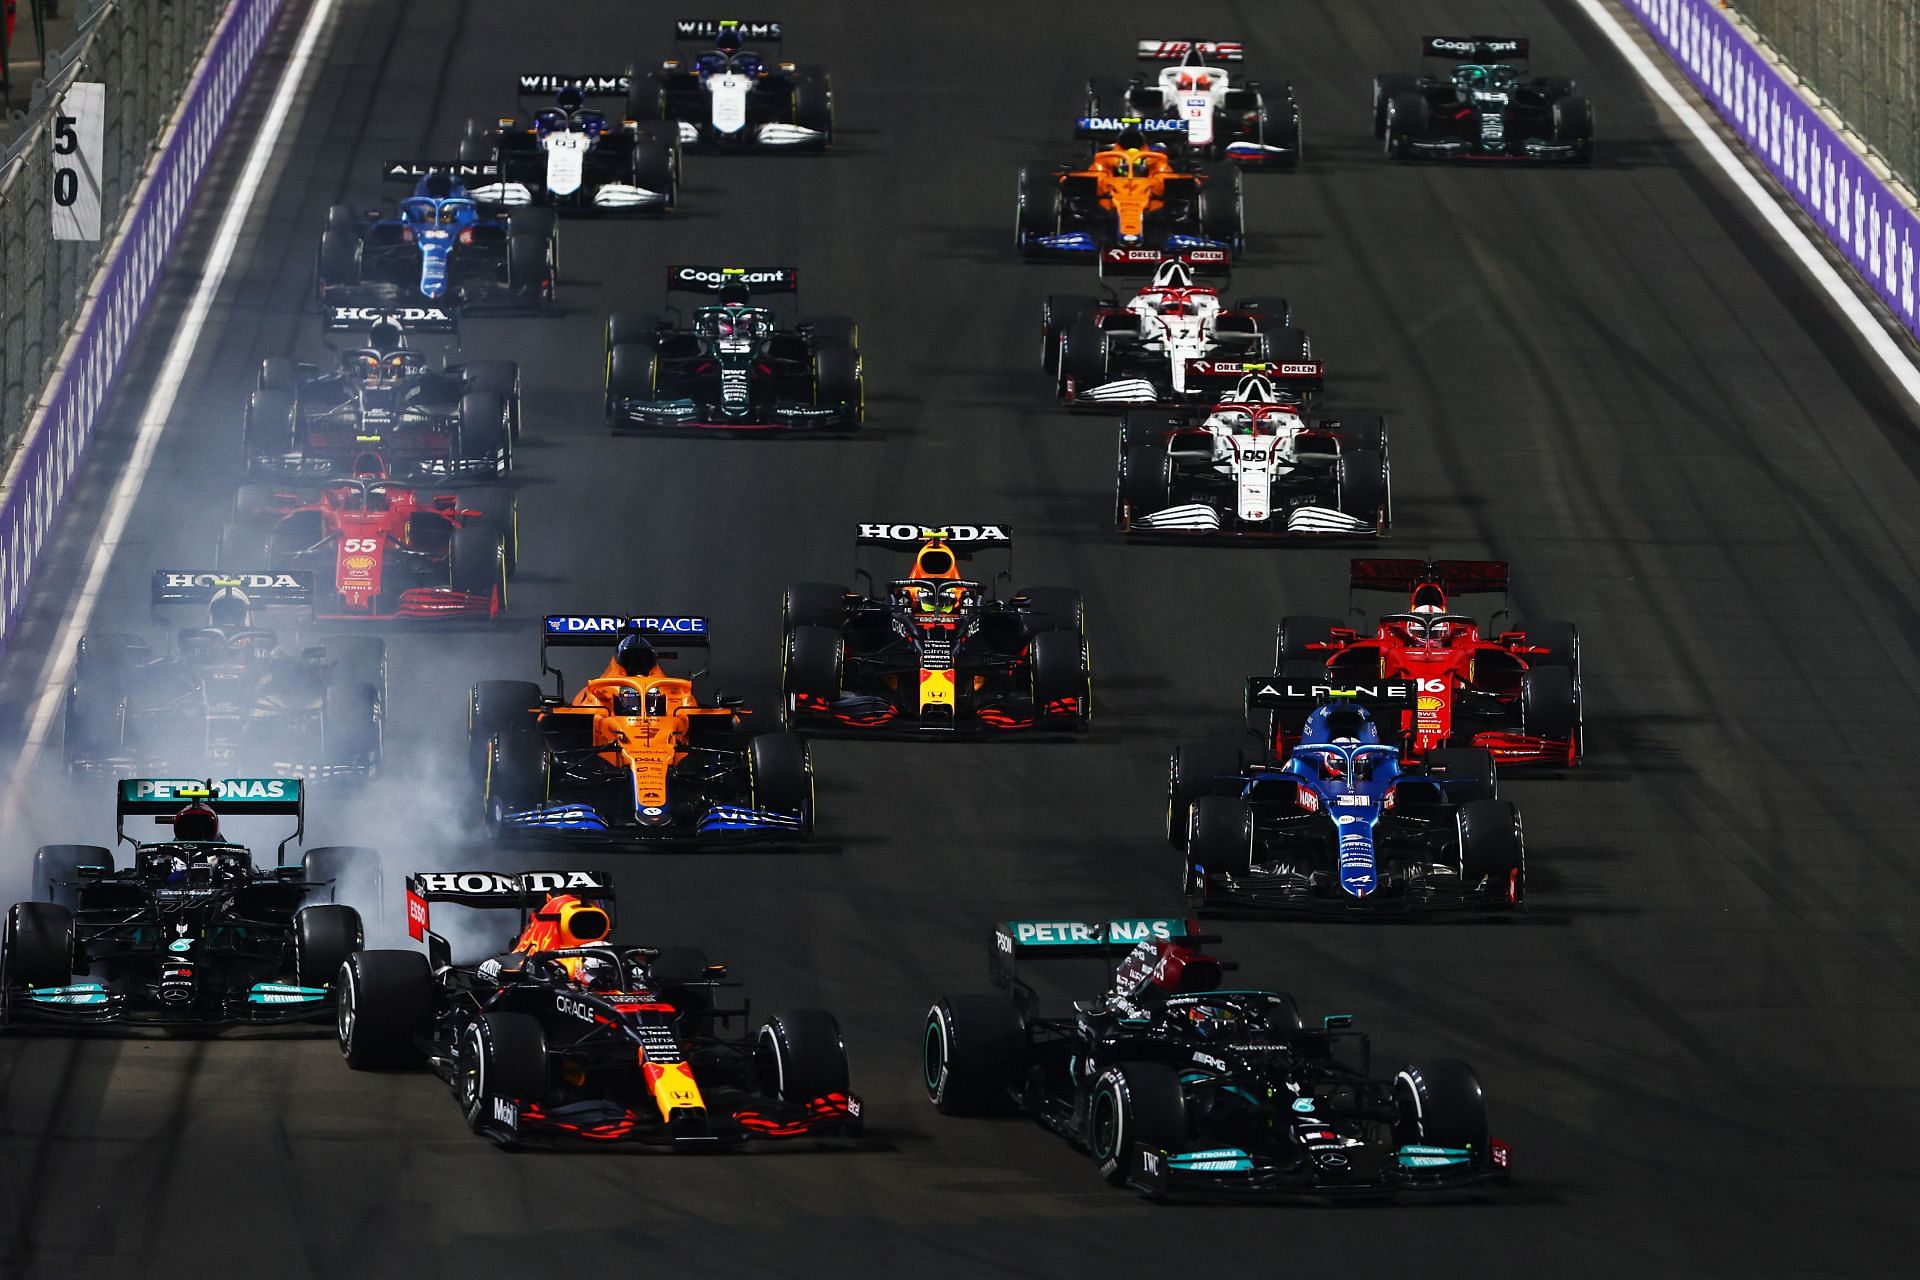 Lewis Hamilton (#44) leads the field during the 2021 Saudi Arabian Grand Prix